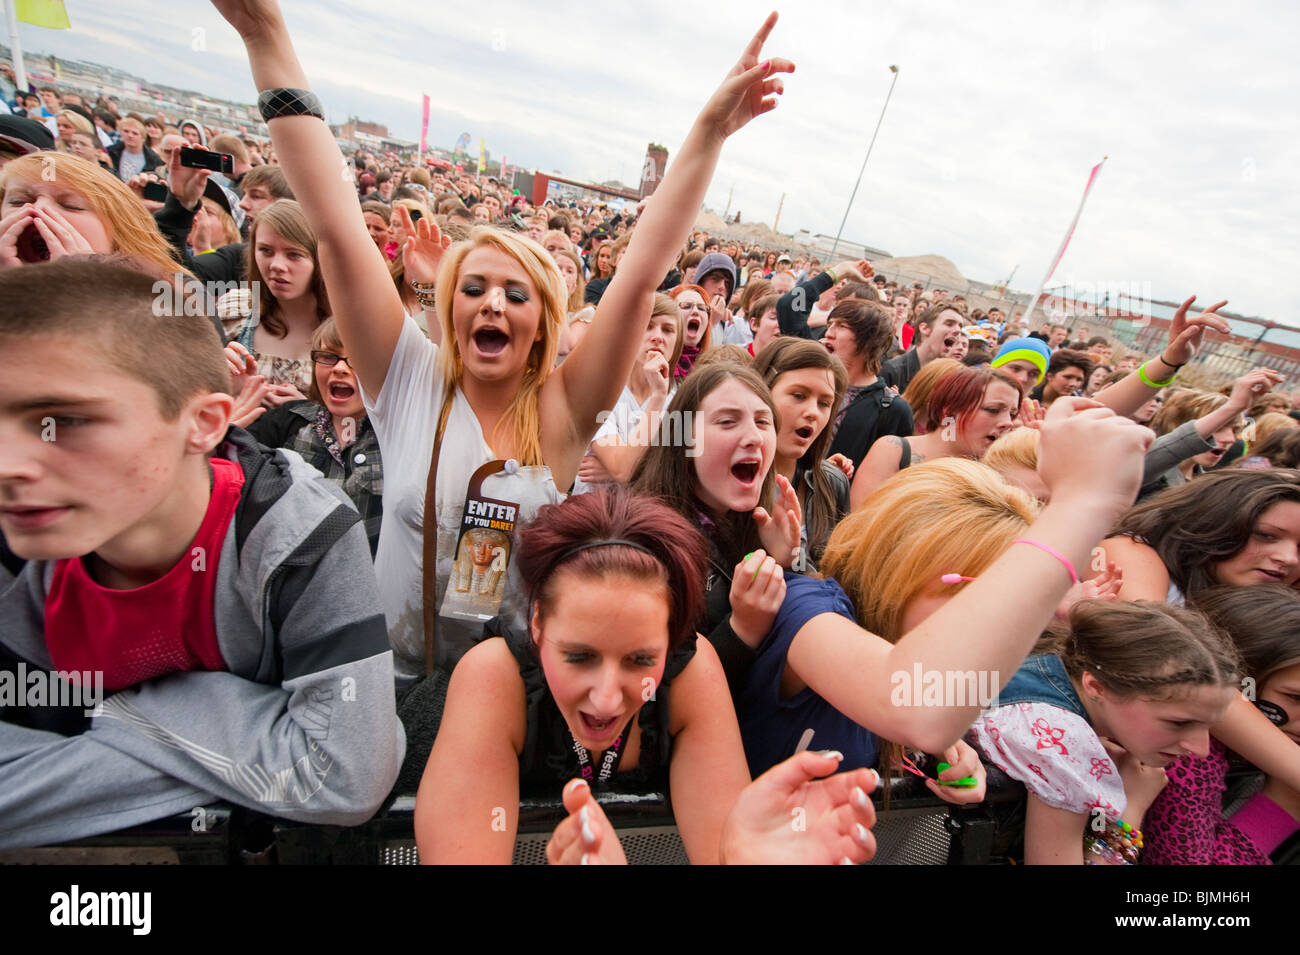 Teenage fans crowd watch pop star on stage Stock Photo